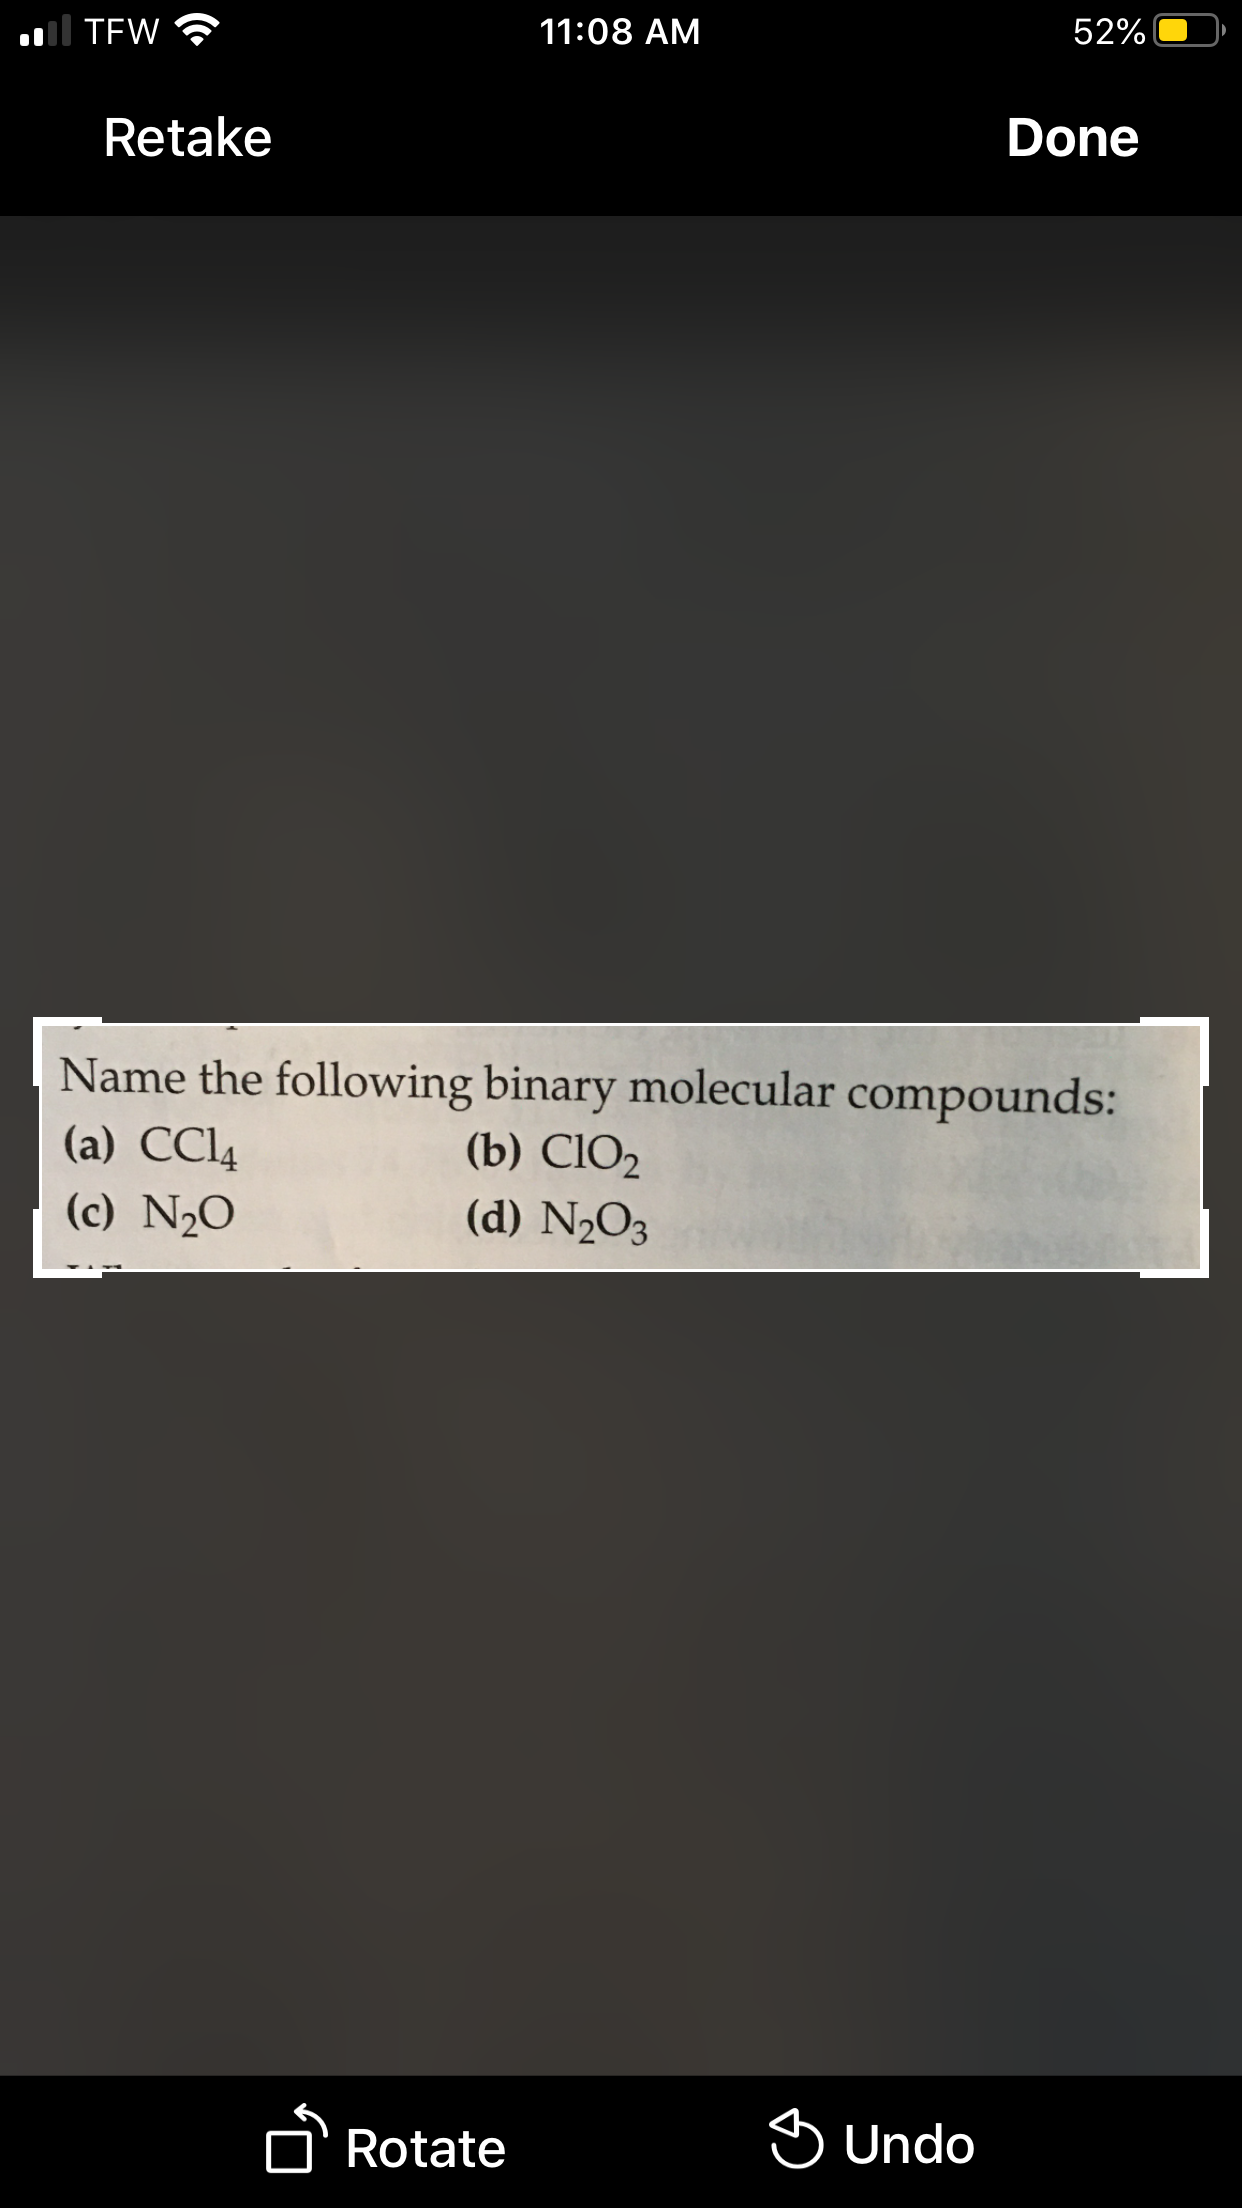 Name the following binary molecular compounds:
(b) CIO2
(a) CC14
(c) N½O
(d) N2O3
